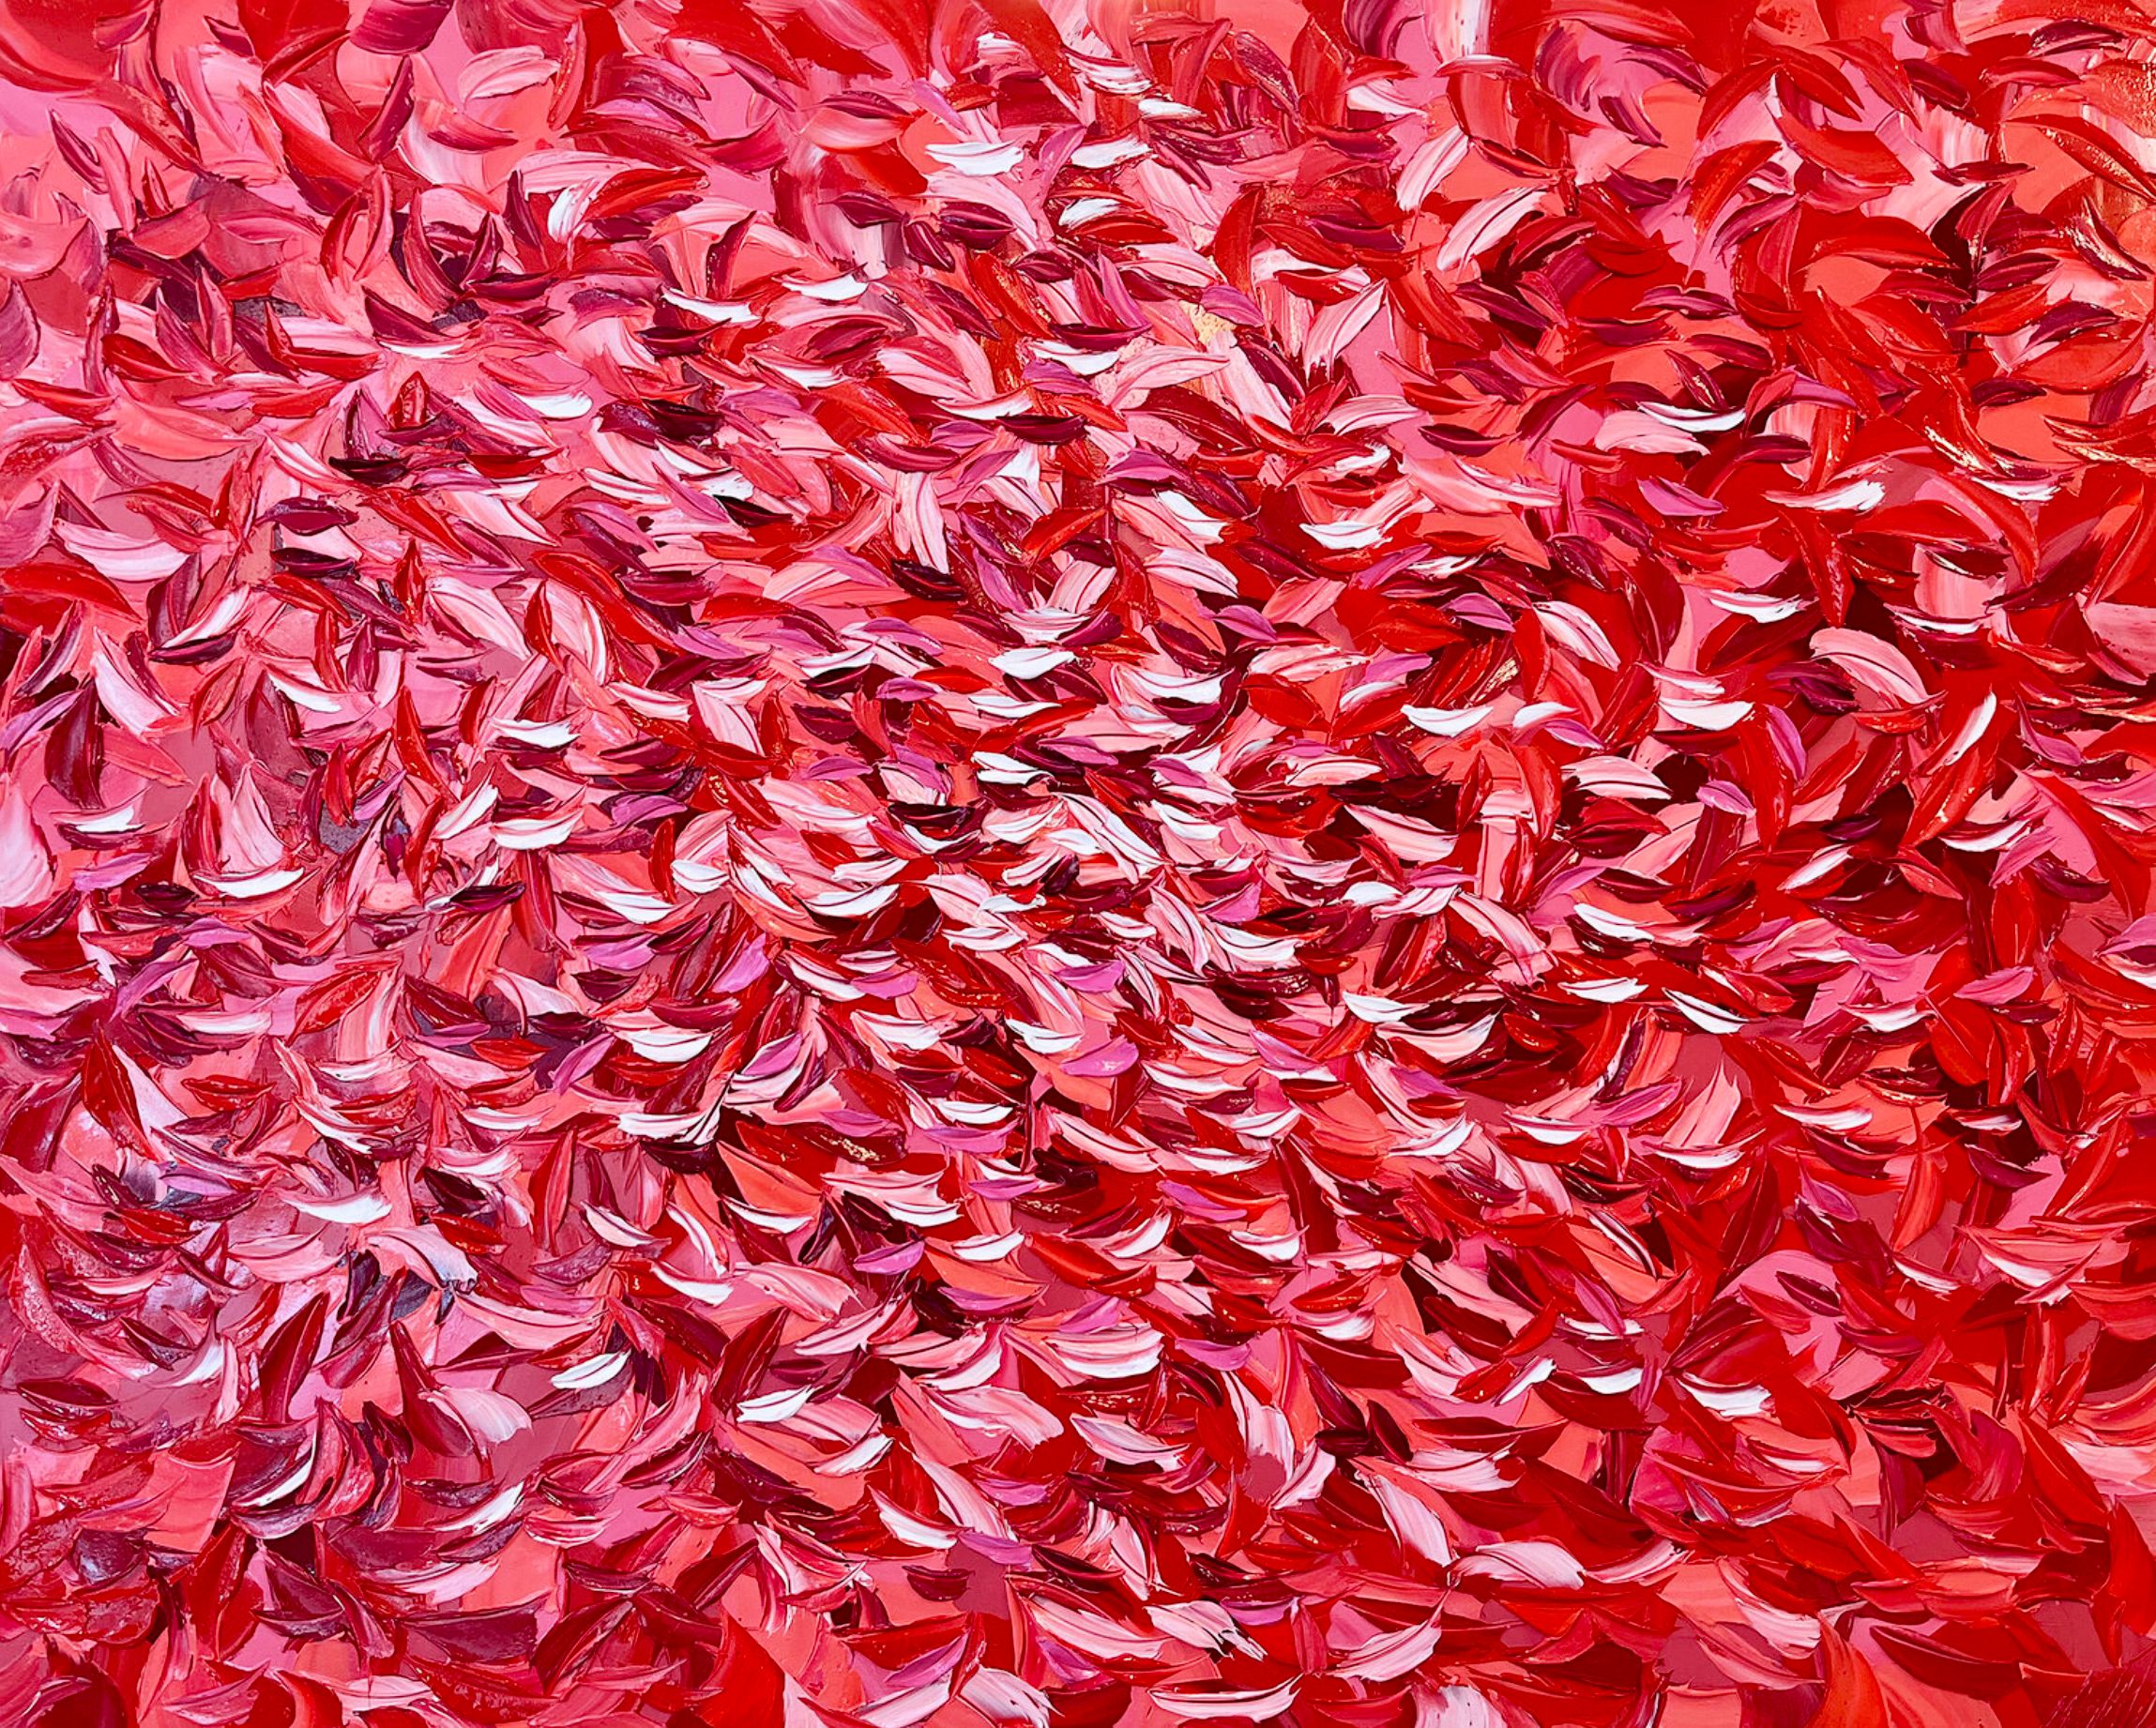 Oliver Messas "L'envolée" Pittura astratta foglie rosse